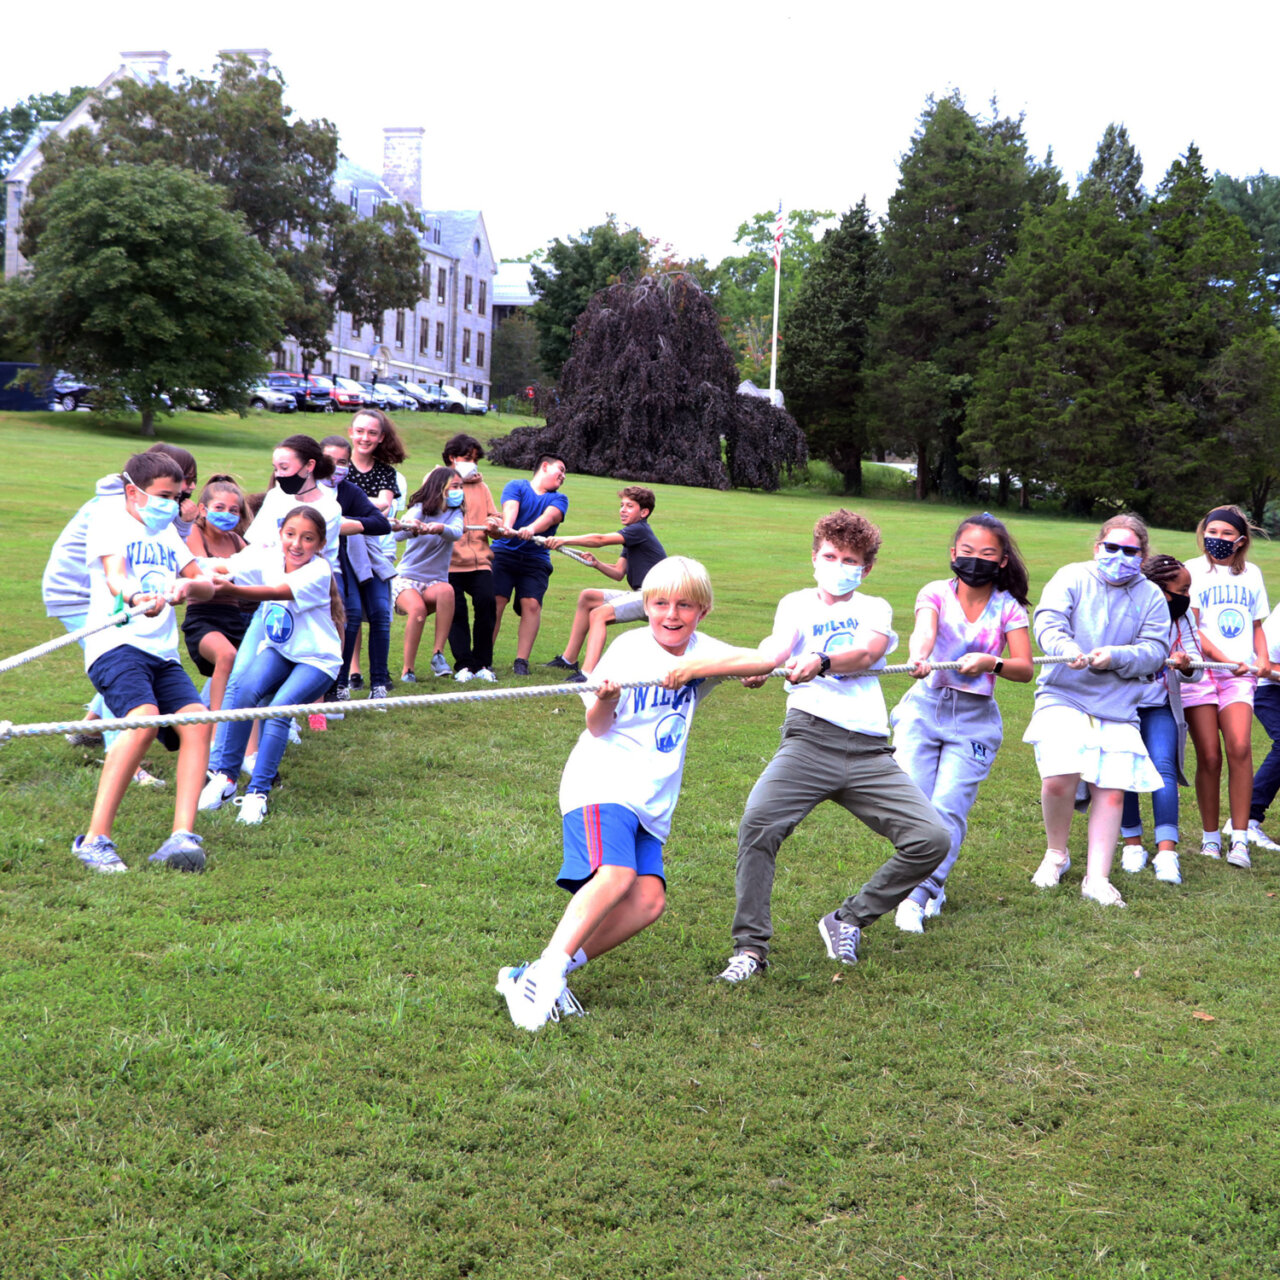 Williams School students play tug of war on grass field